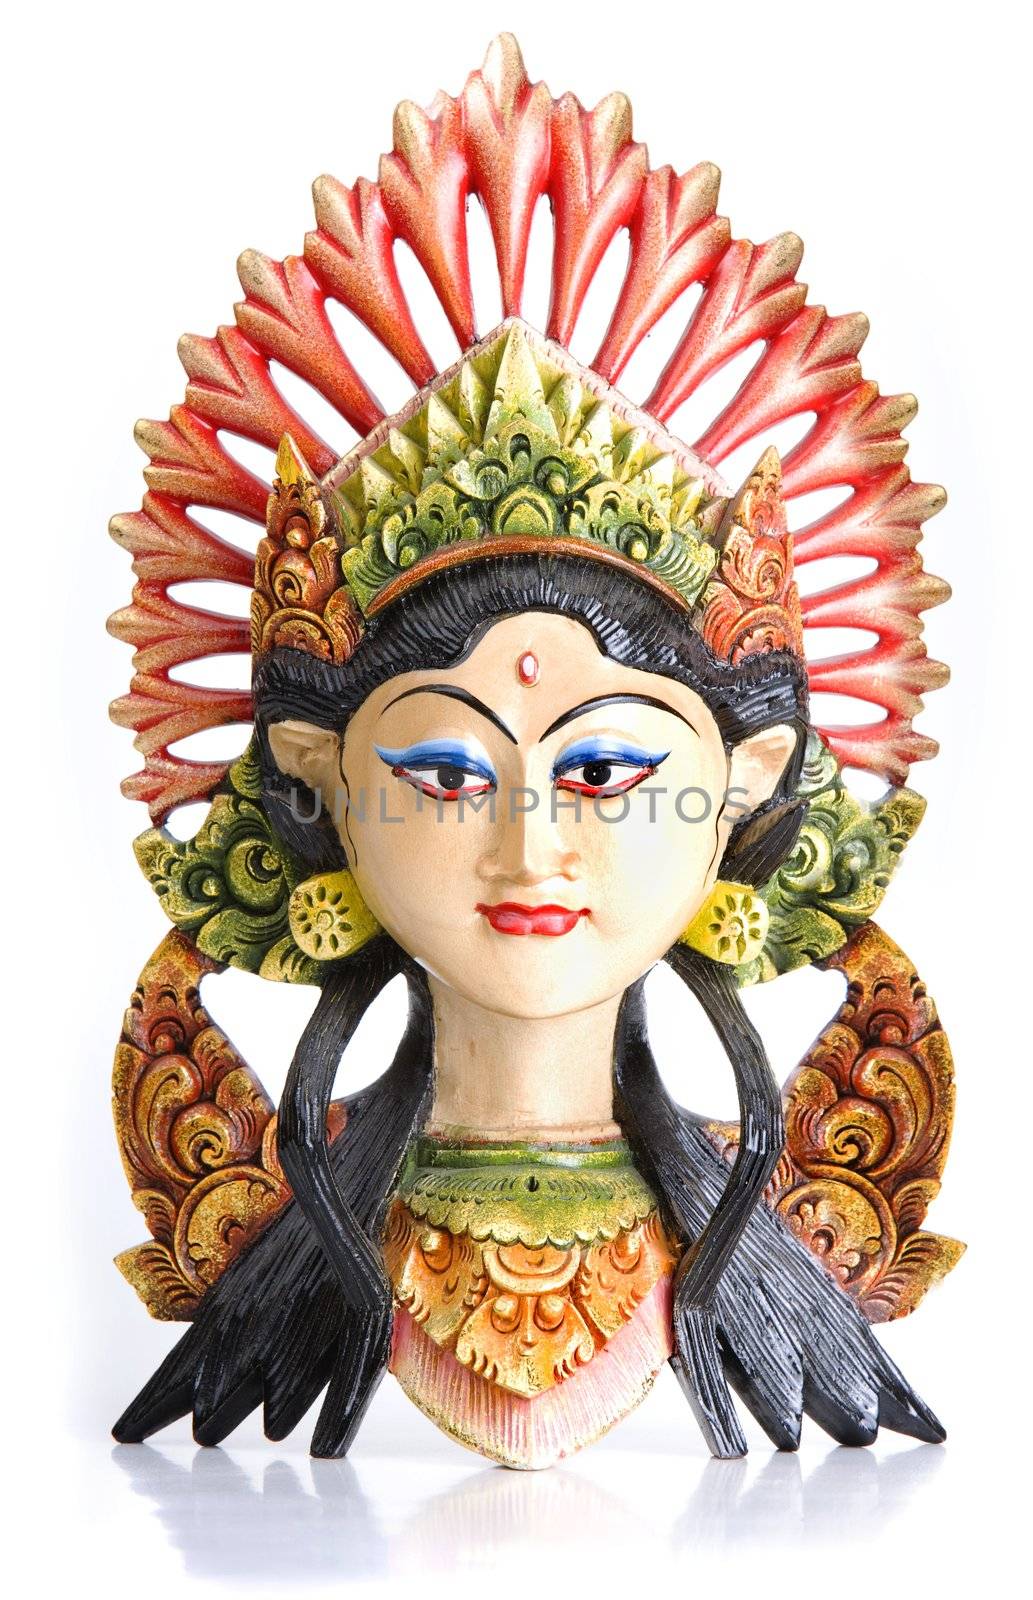 Eastern Indian Goddess Figure by Creatista